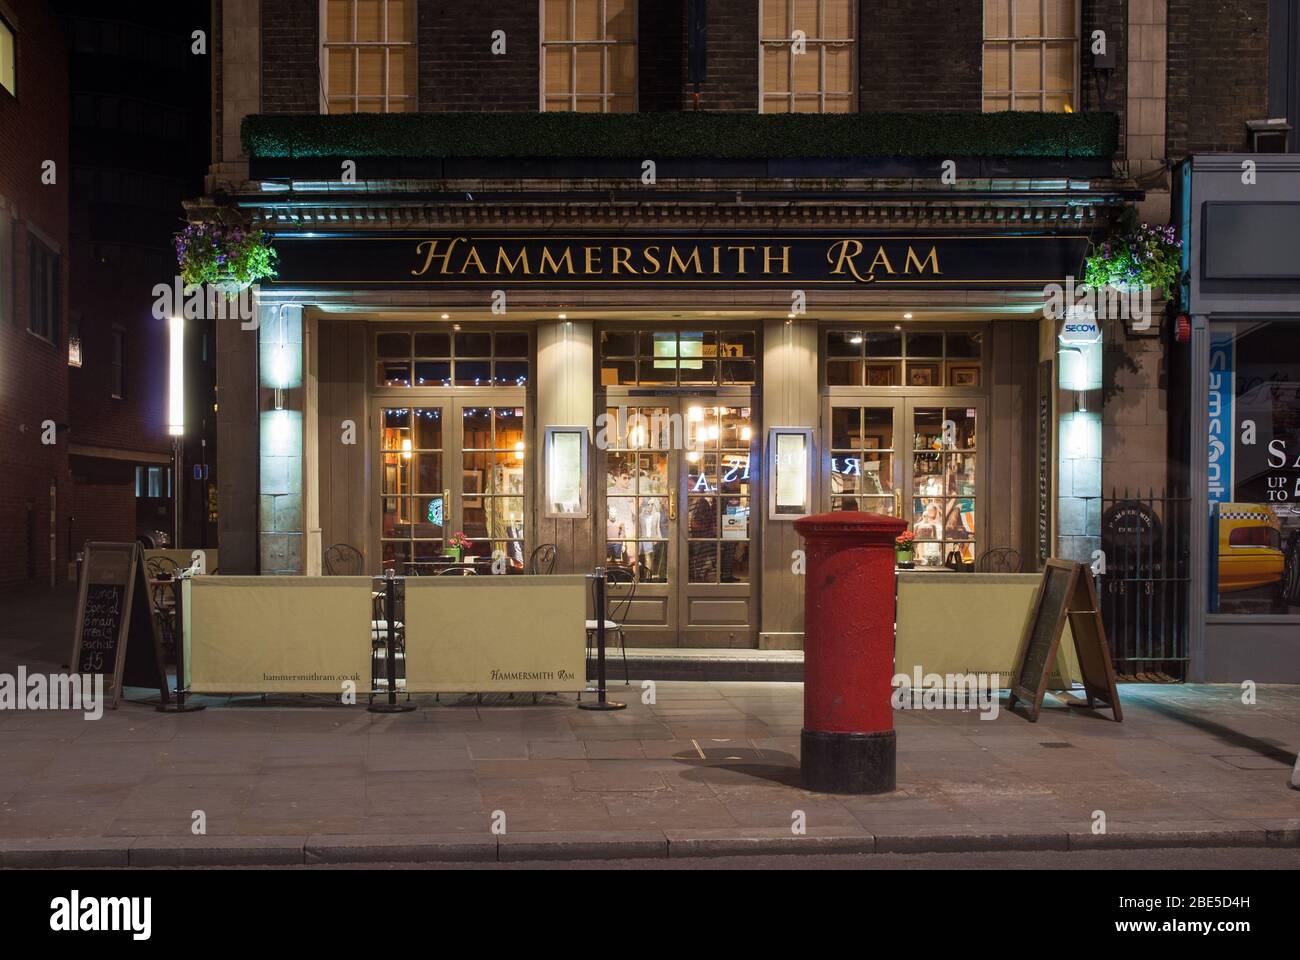 Hammersmith RAM, 81 King Street, Hammersmith, London W6 9HW Stockfoto